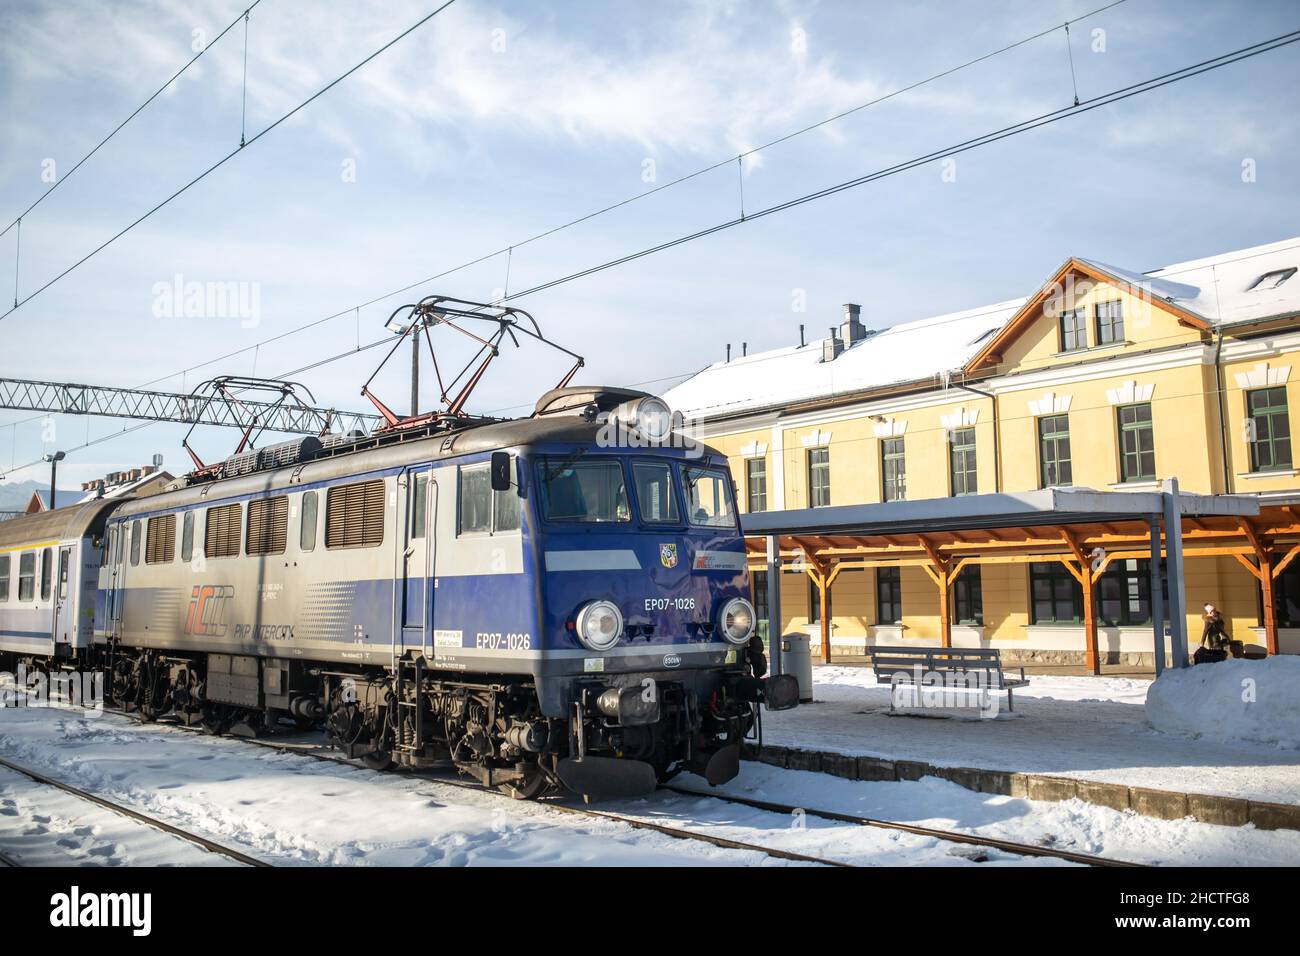 Zakopane, Poland - December 28, 2021: Train at Zakopane train station on December 28, 2021. Stock Photo